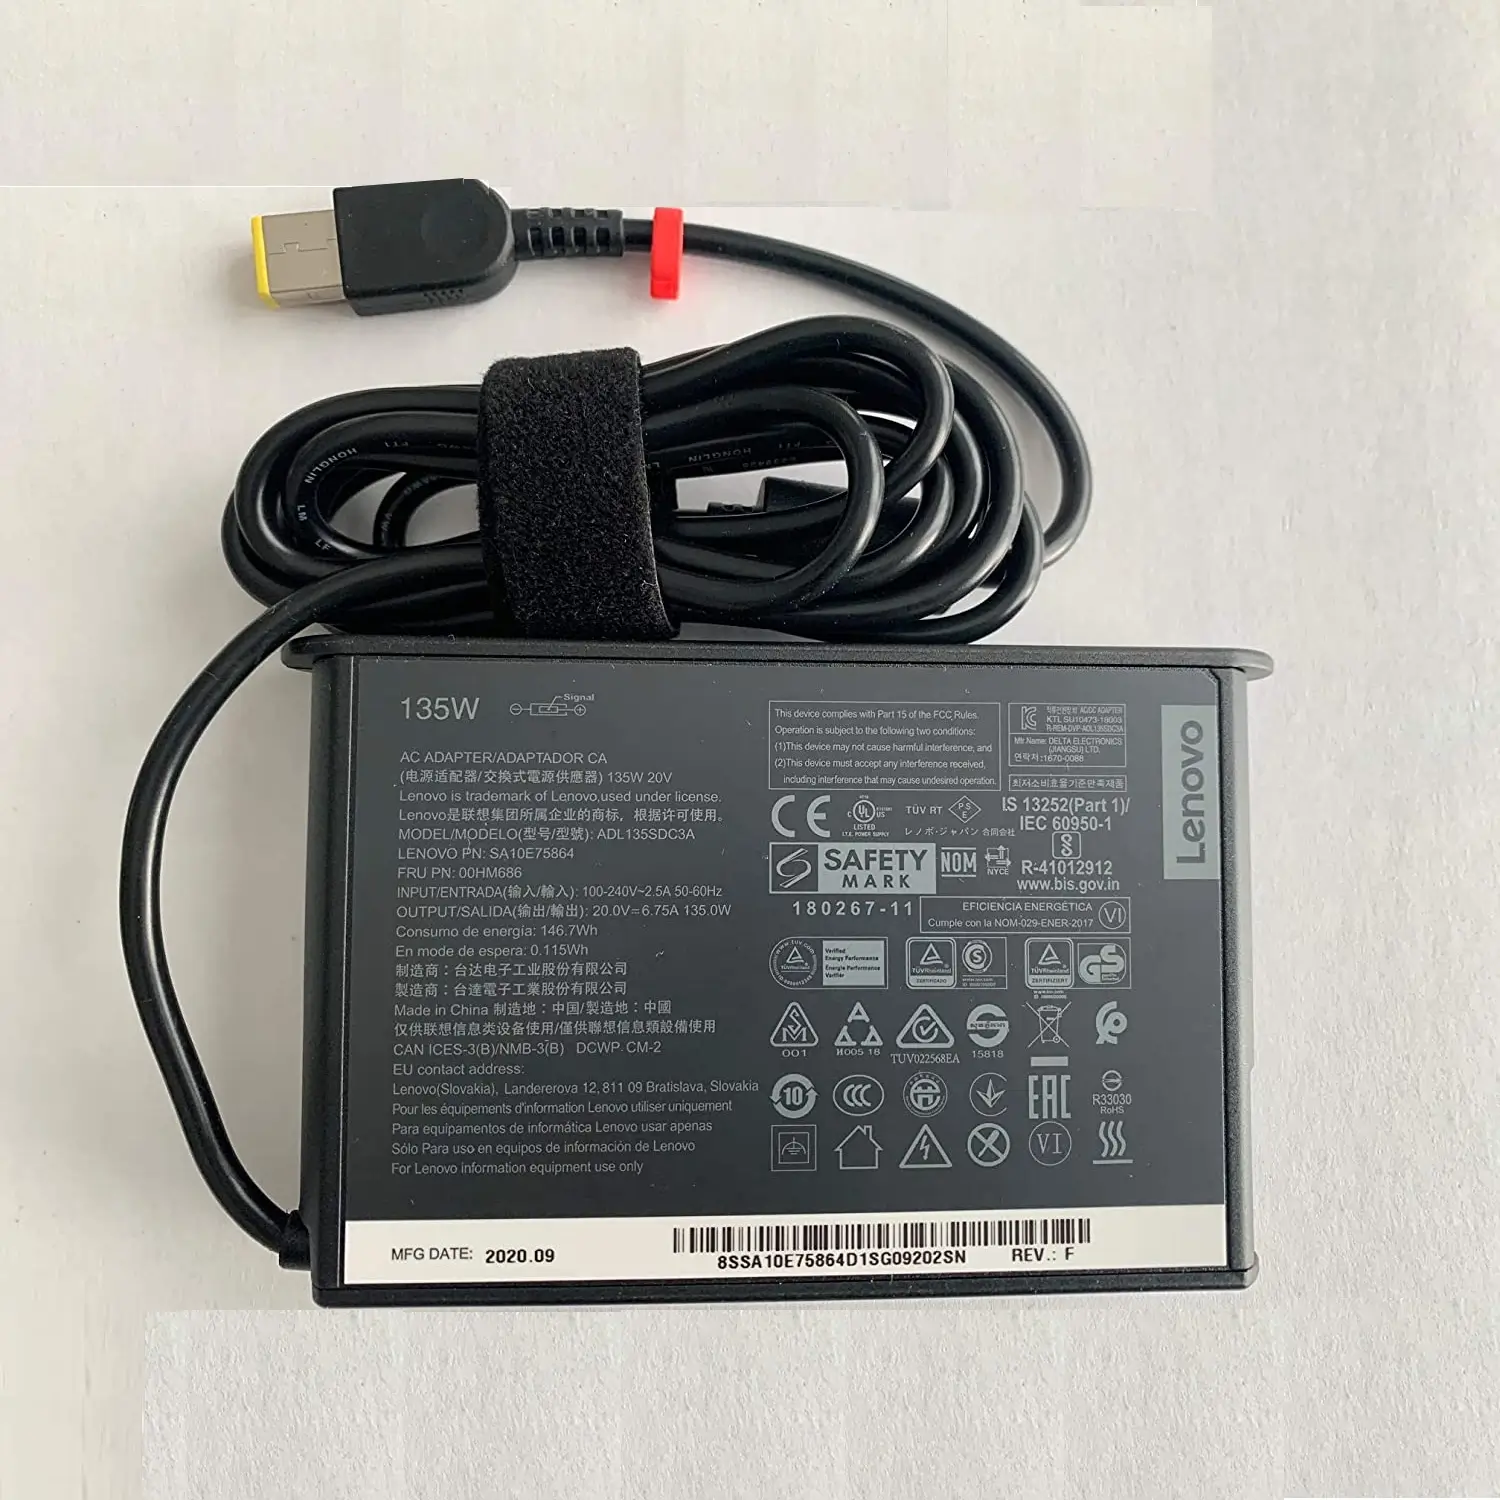 ThinkPad Mobile Workstation Slim 230W AC Adapter (Slim-tip